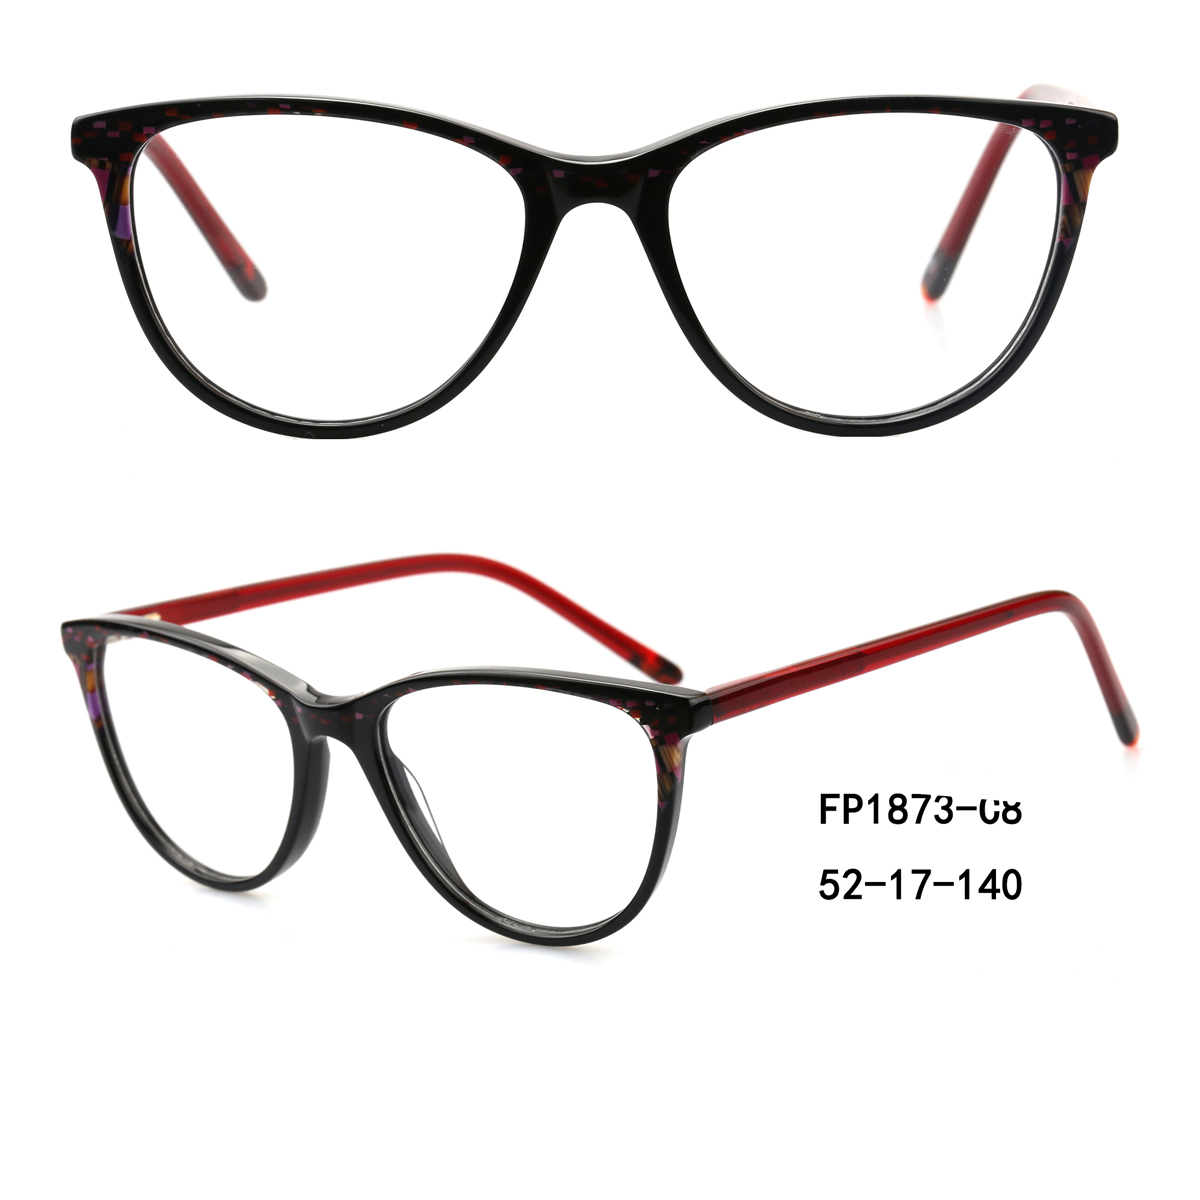 Wooden Prescription Glasses Frame Wholesale,Wood Eyeglass Frame Supplier